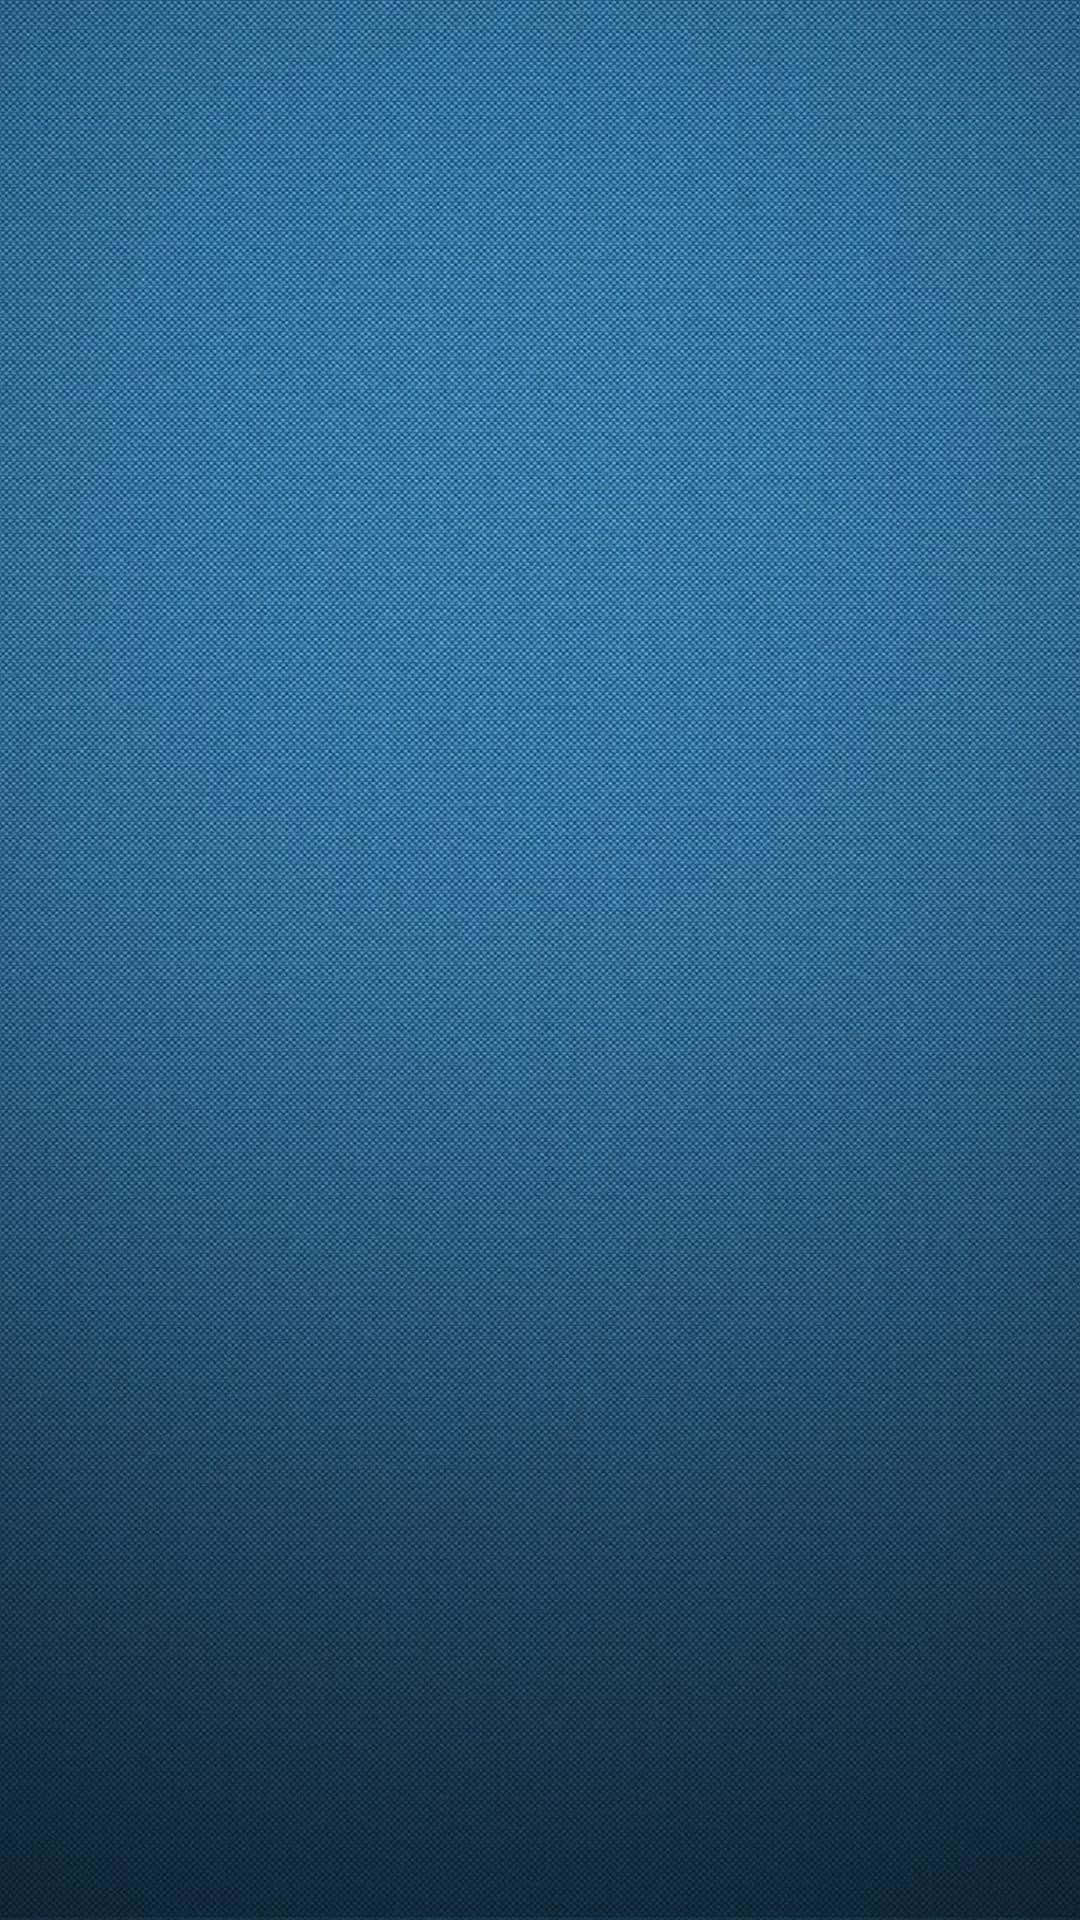 100 Solid Blue Background s  Wallpaperscom